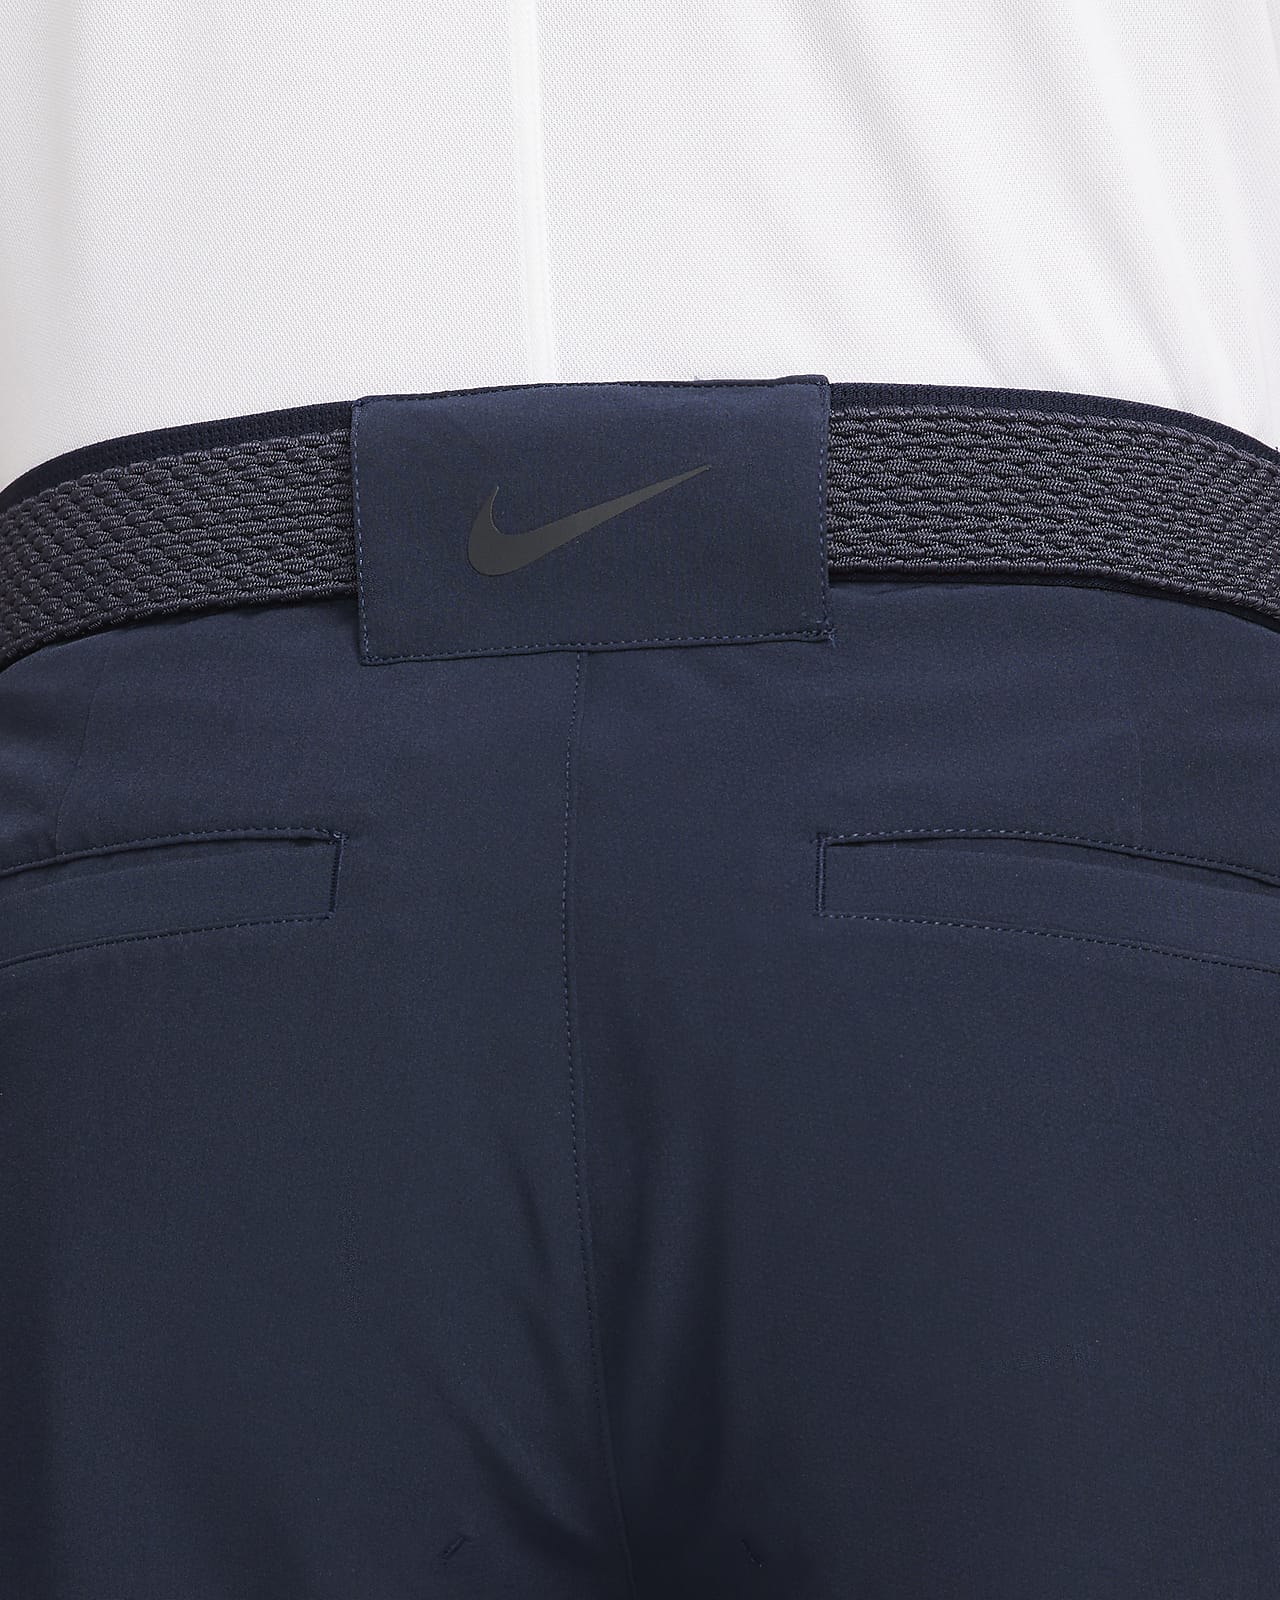 Nike 2017 Modern Fit Washed Golf Pants Dark Grey 3532  Amazonin Fashion